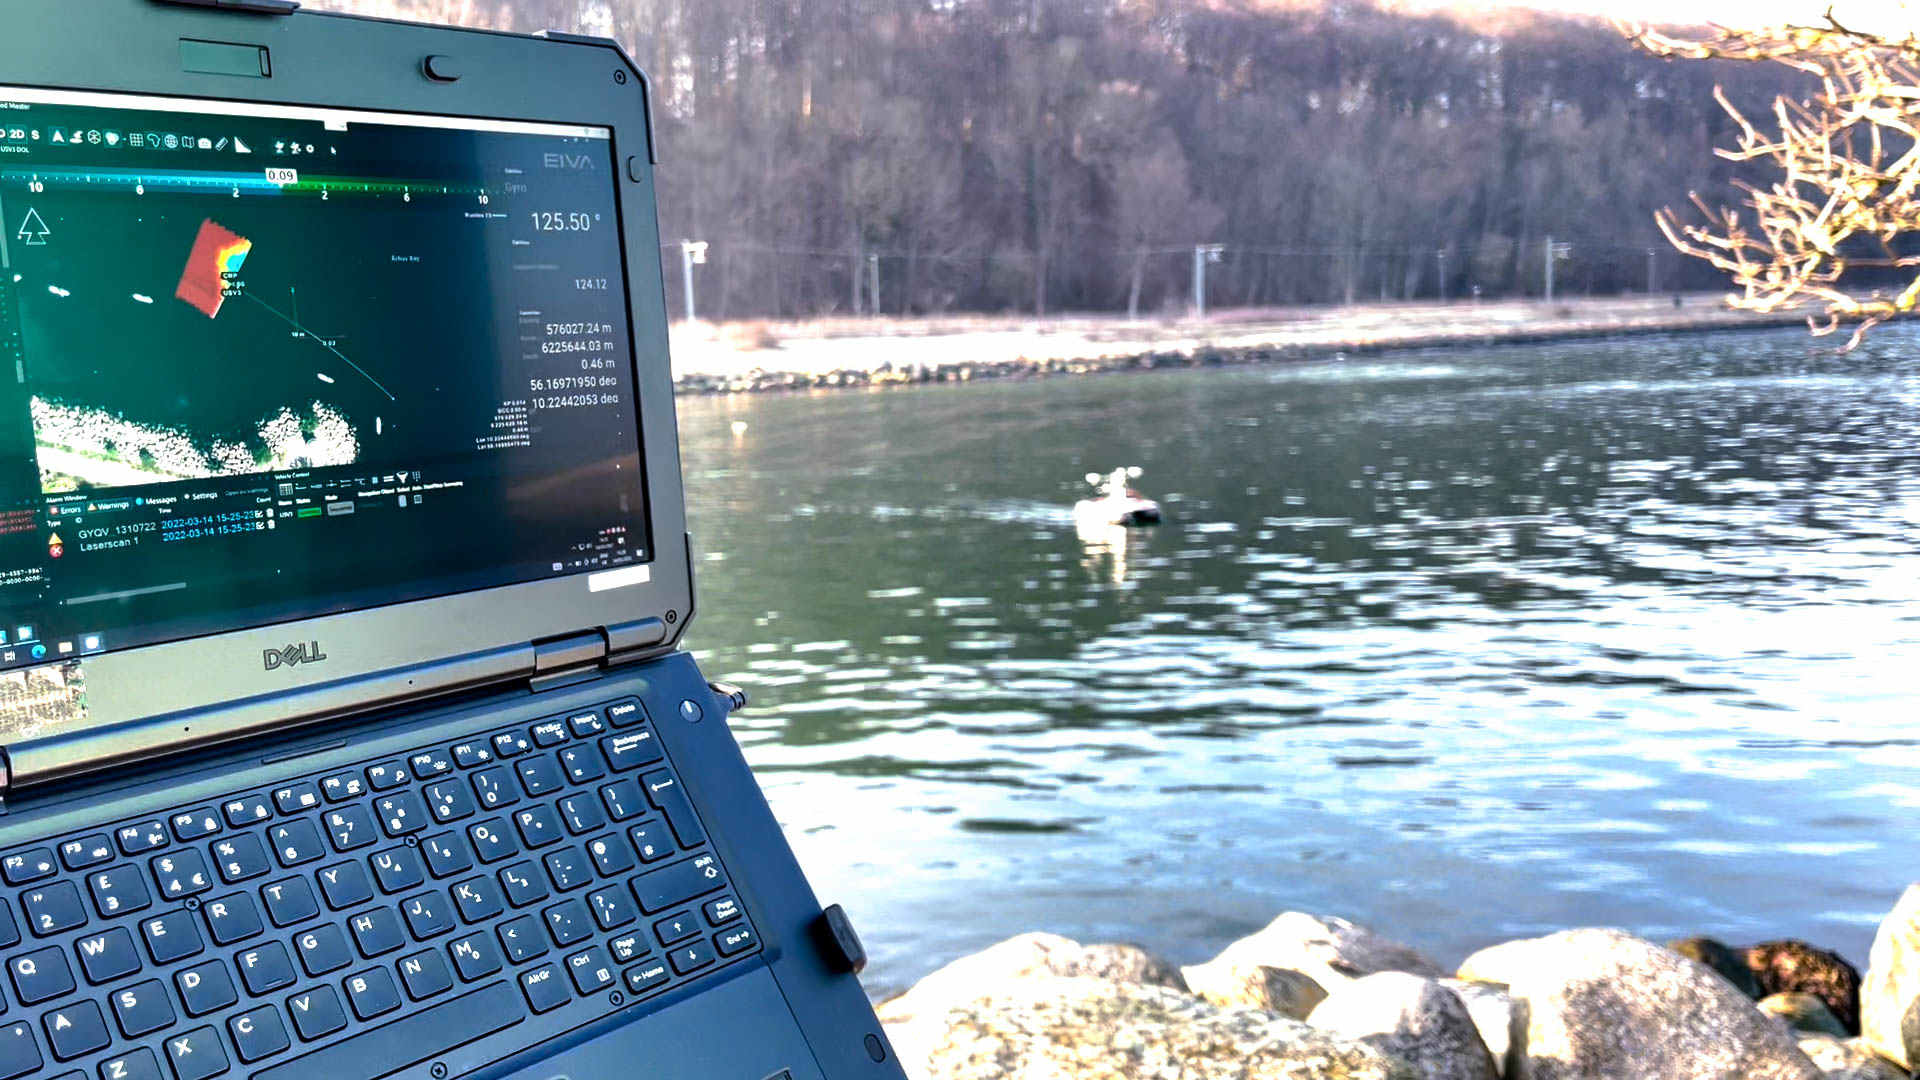 2 NaviSuite Kuda Autopilot lake and laptop credit EIVA